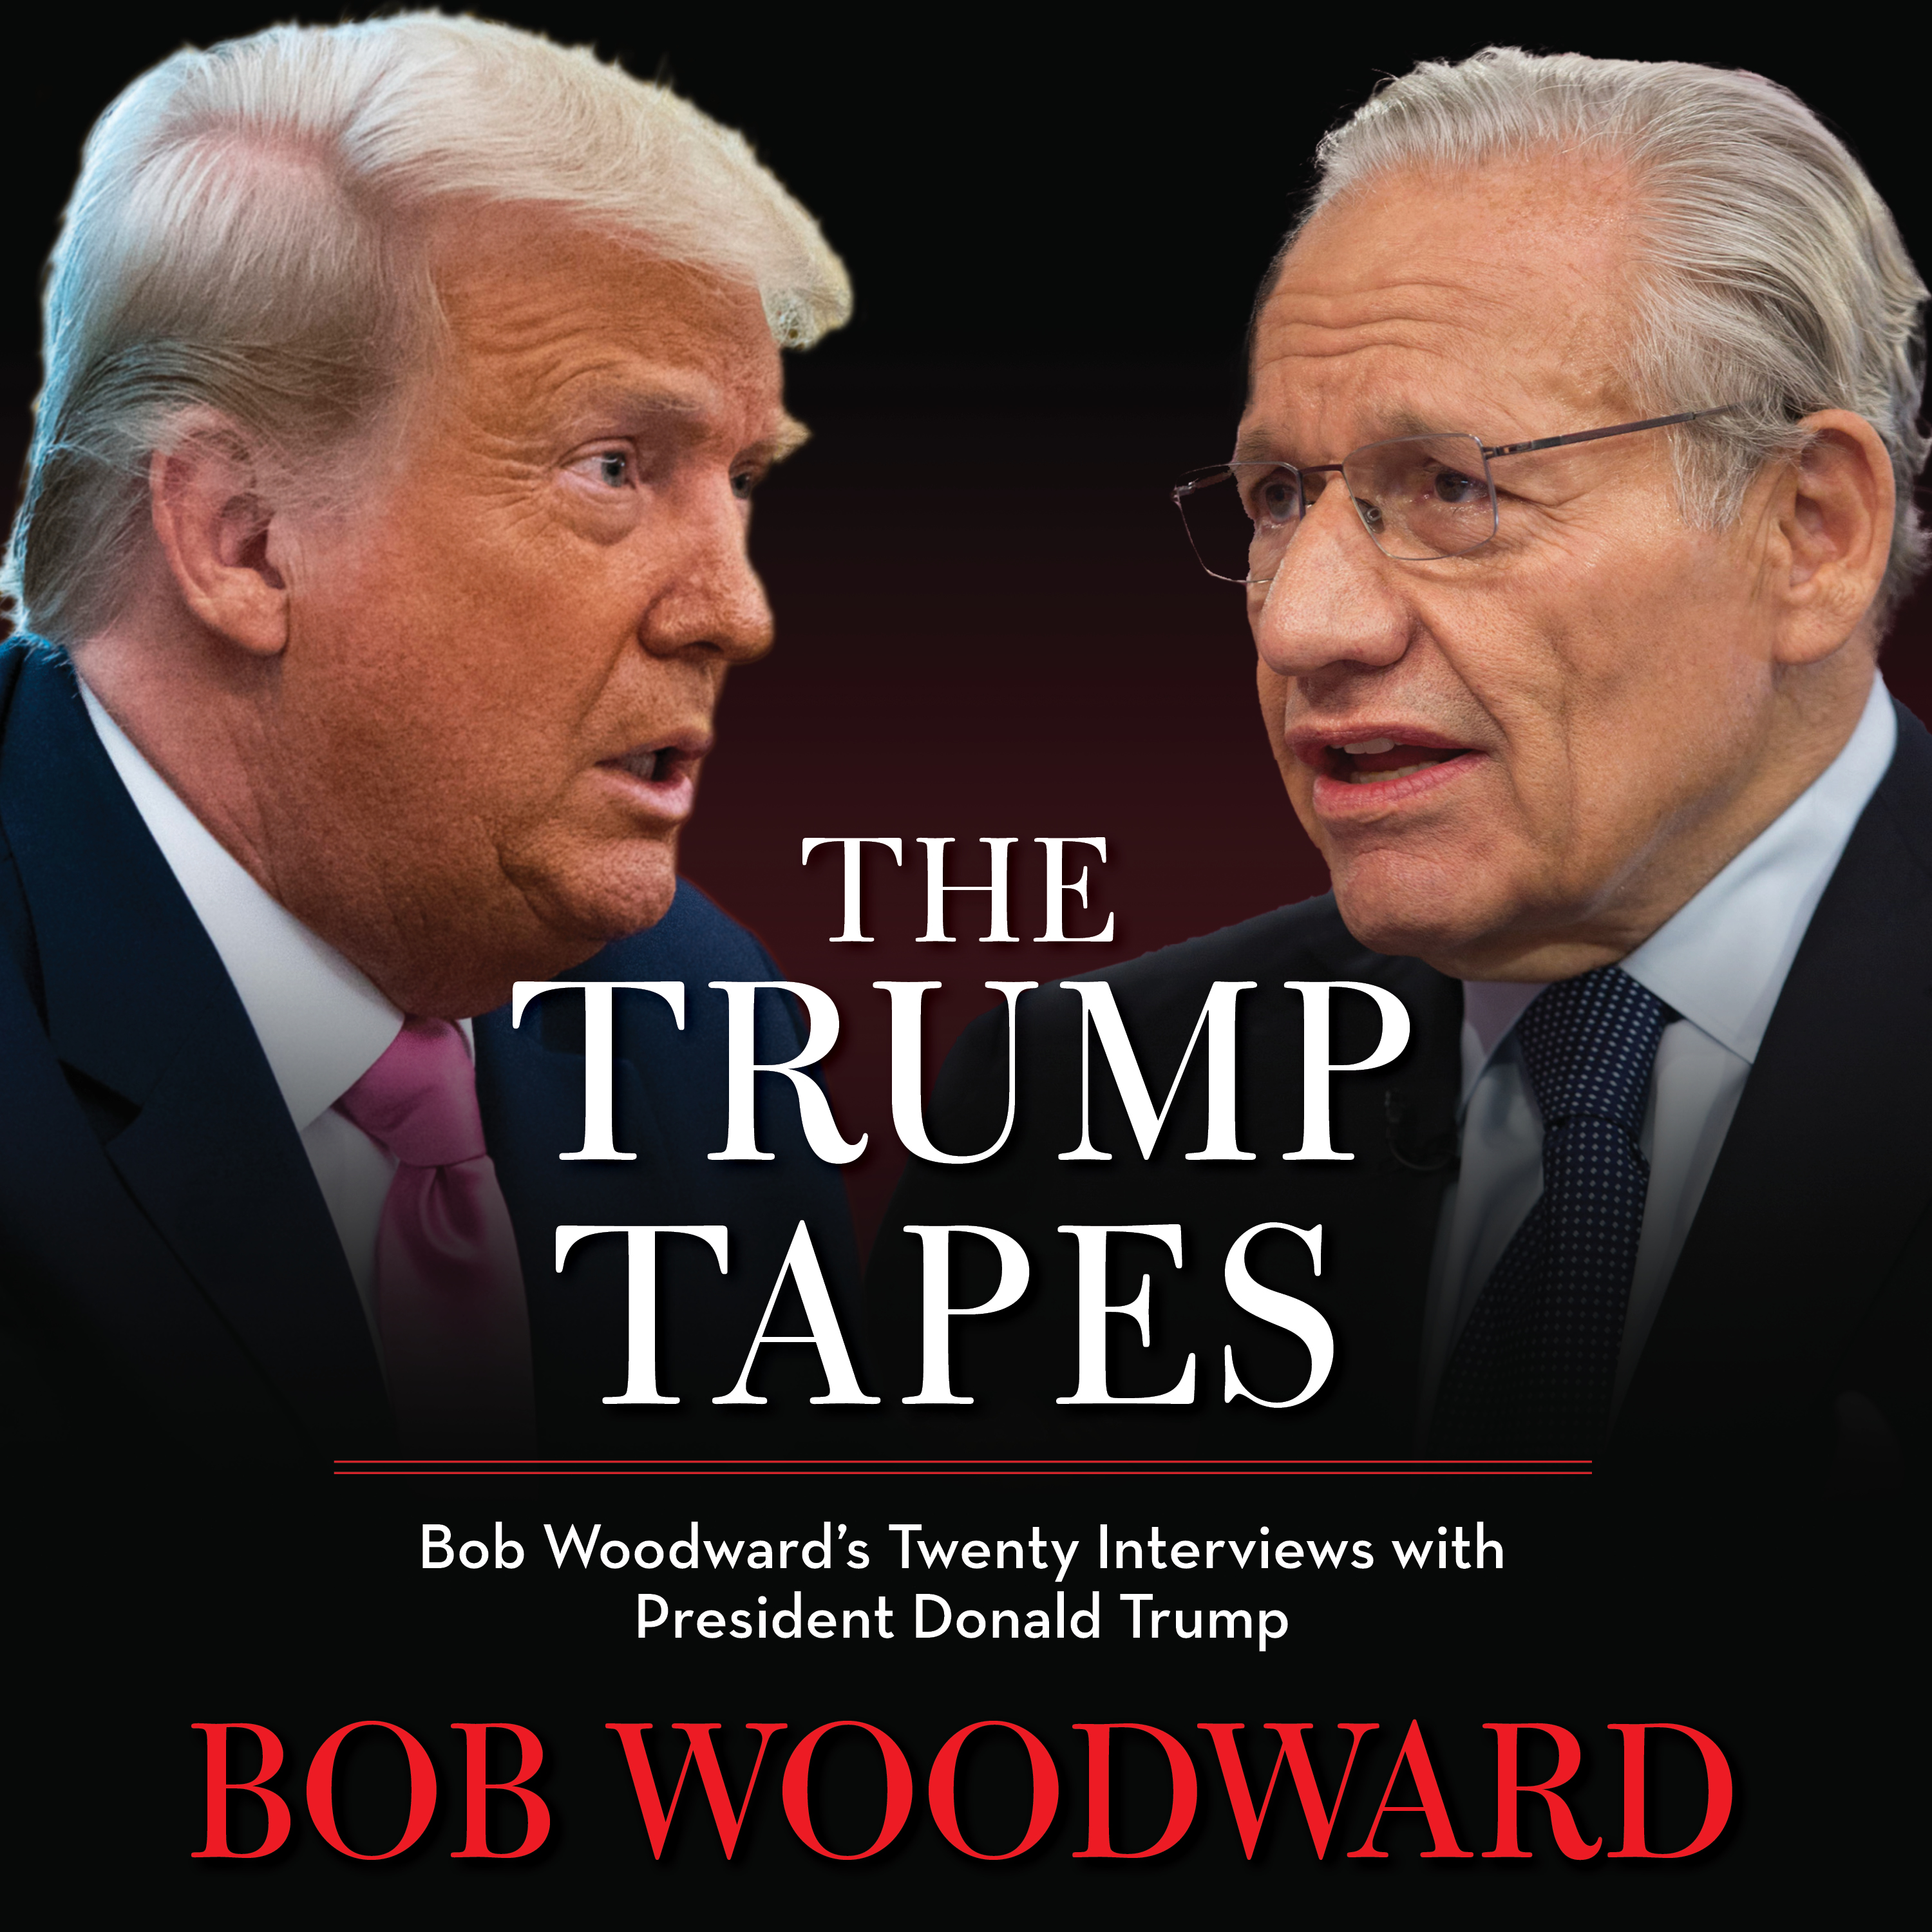 Bob Woodwards Twenty Interviews with President Donald Trump